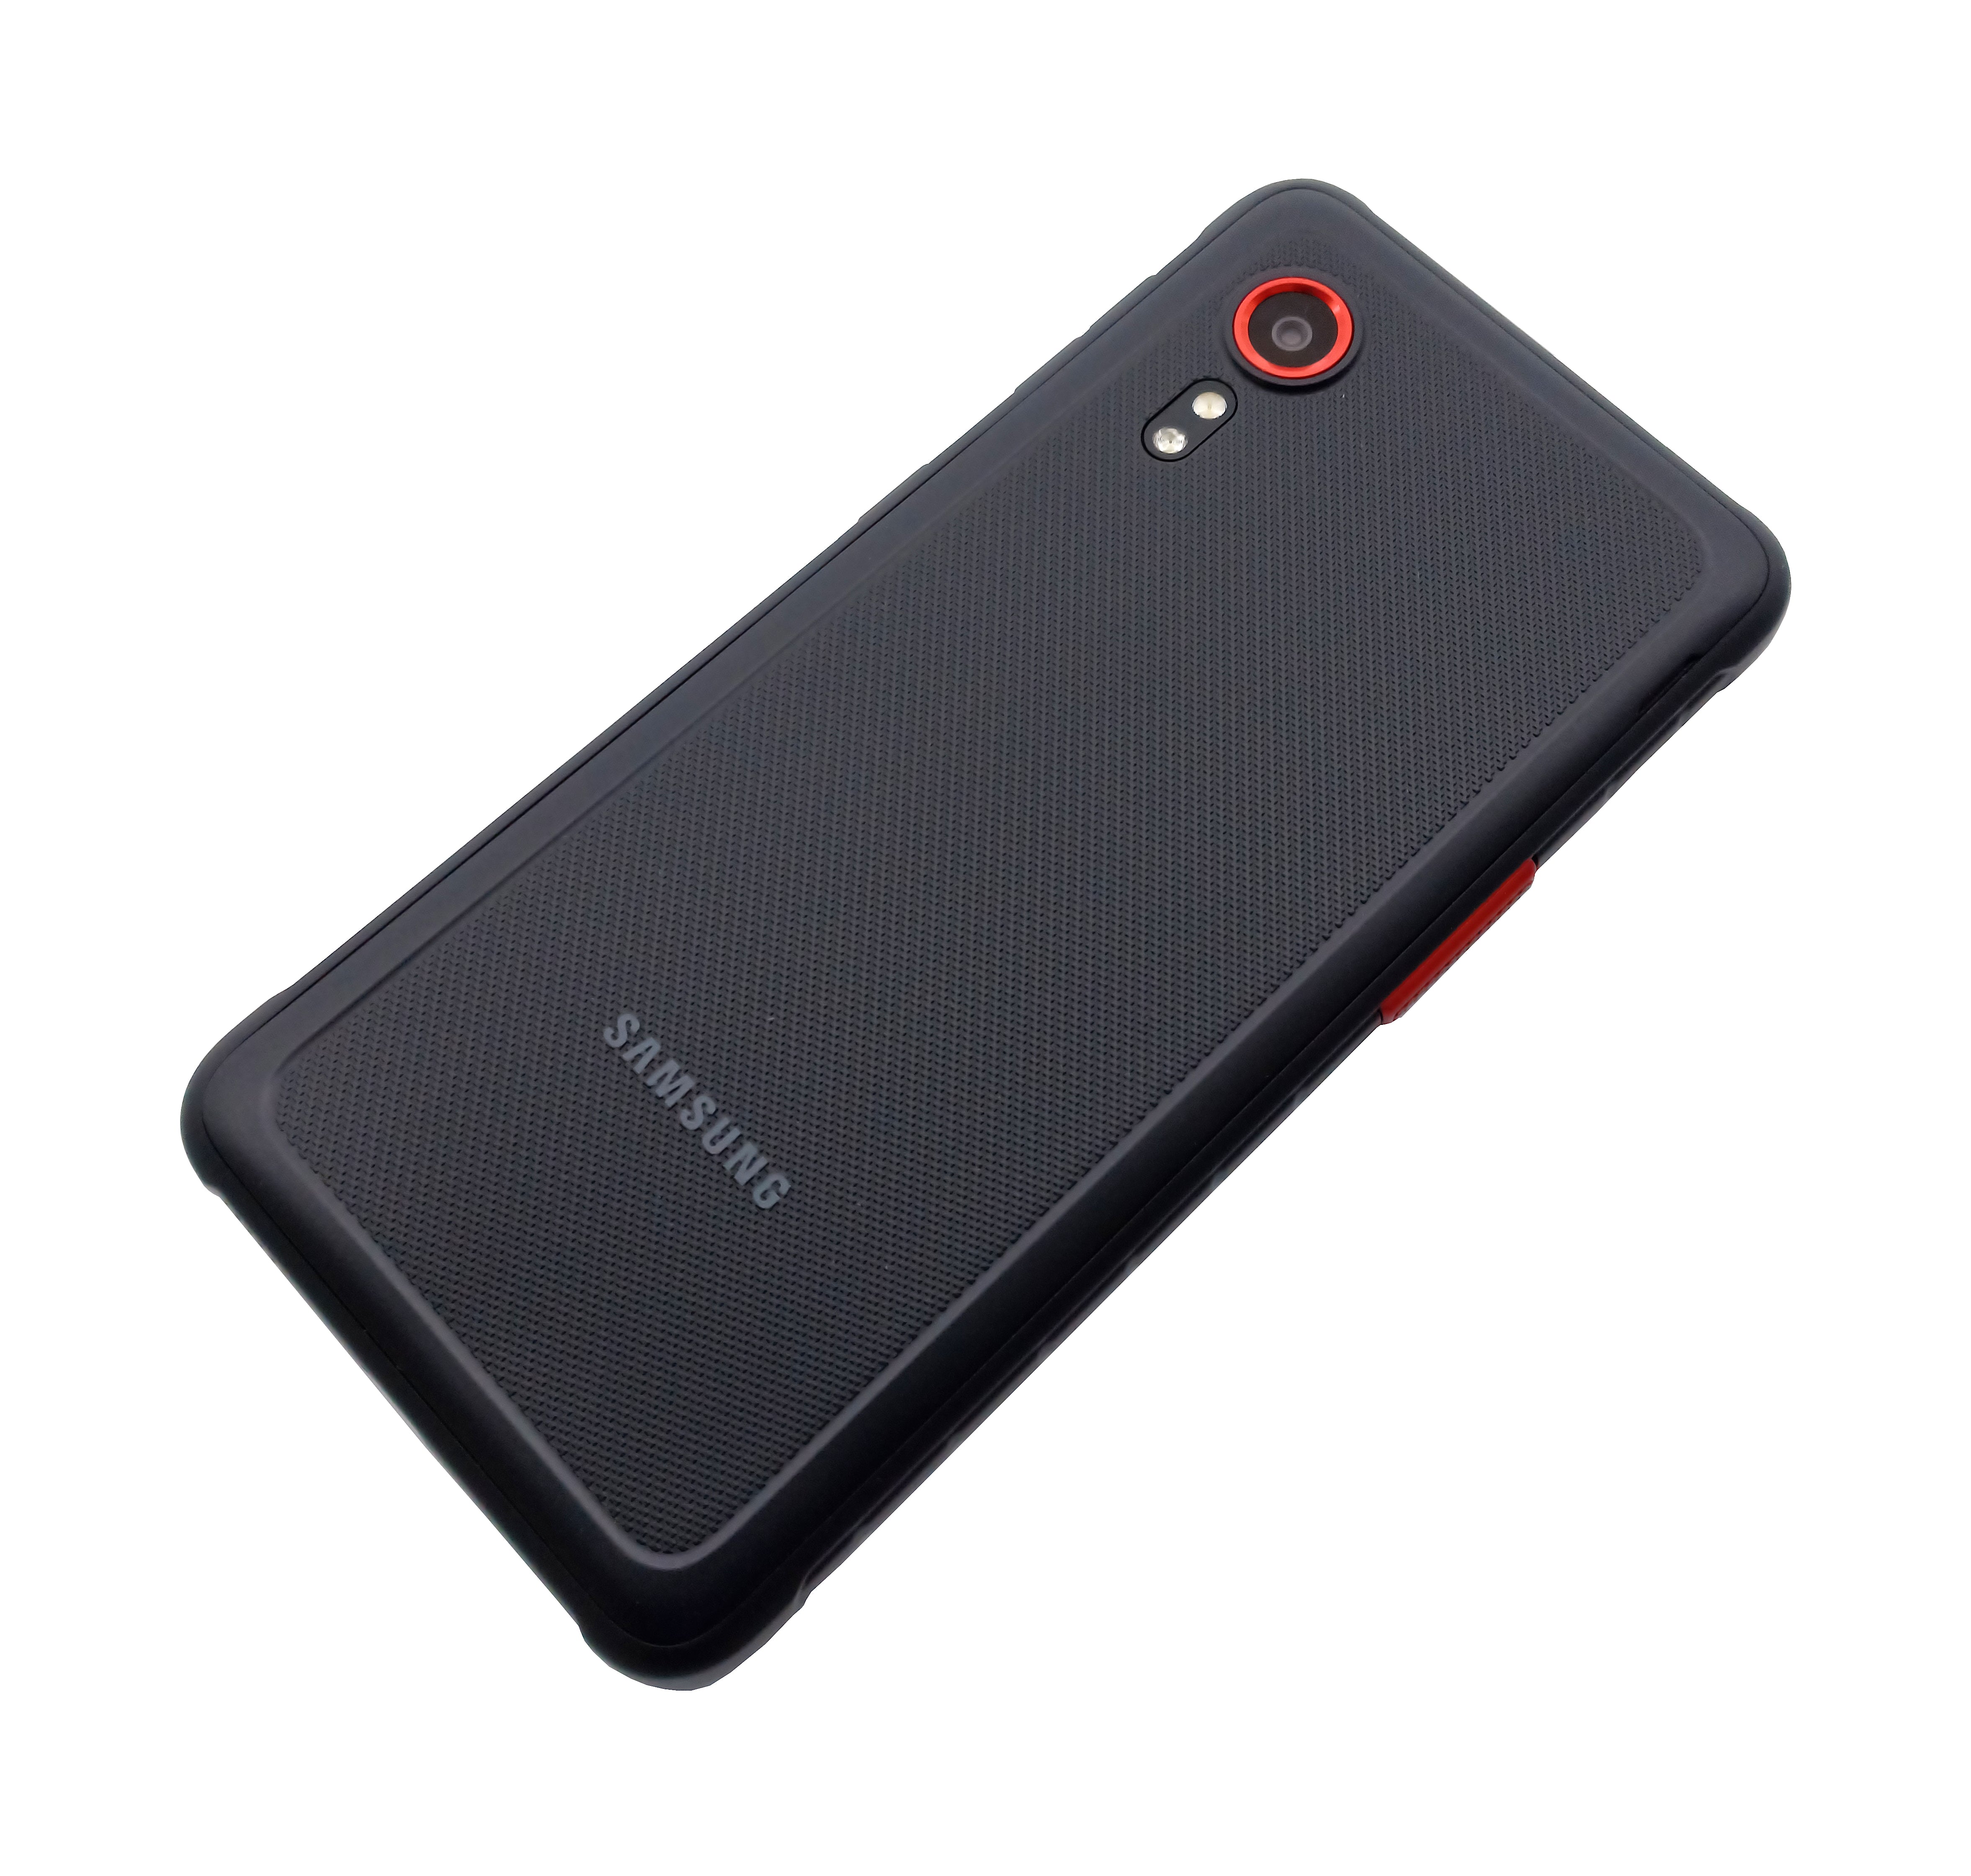 Samsung Galaxy XCover 5 Smartphone, 64GB, Network Unlocked, Black, SM-G525F